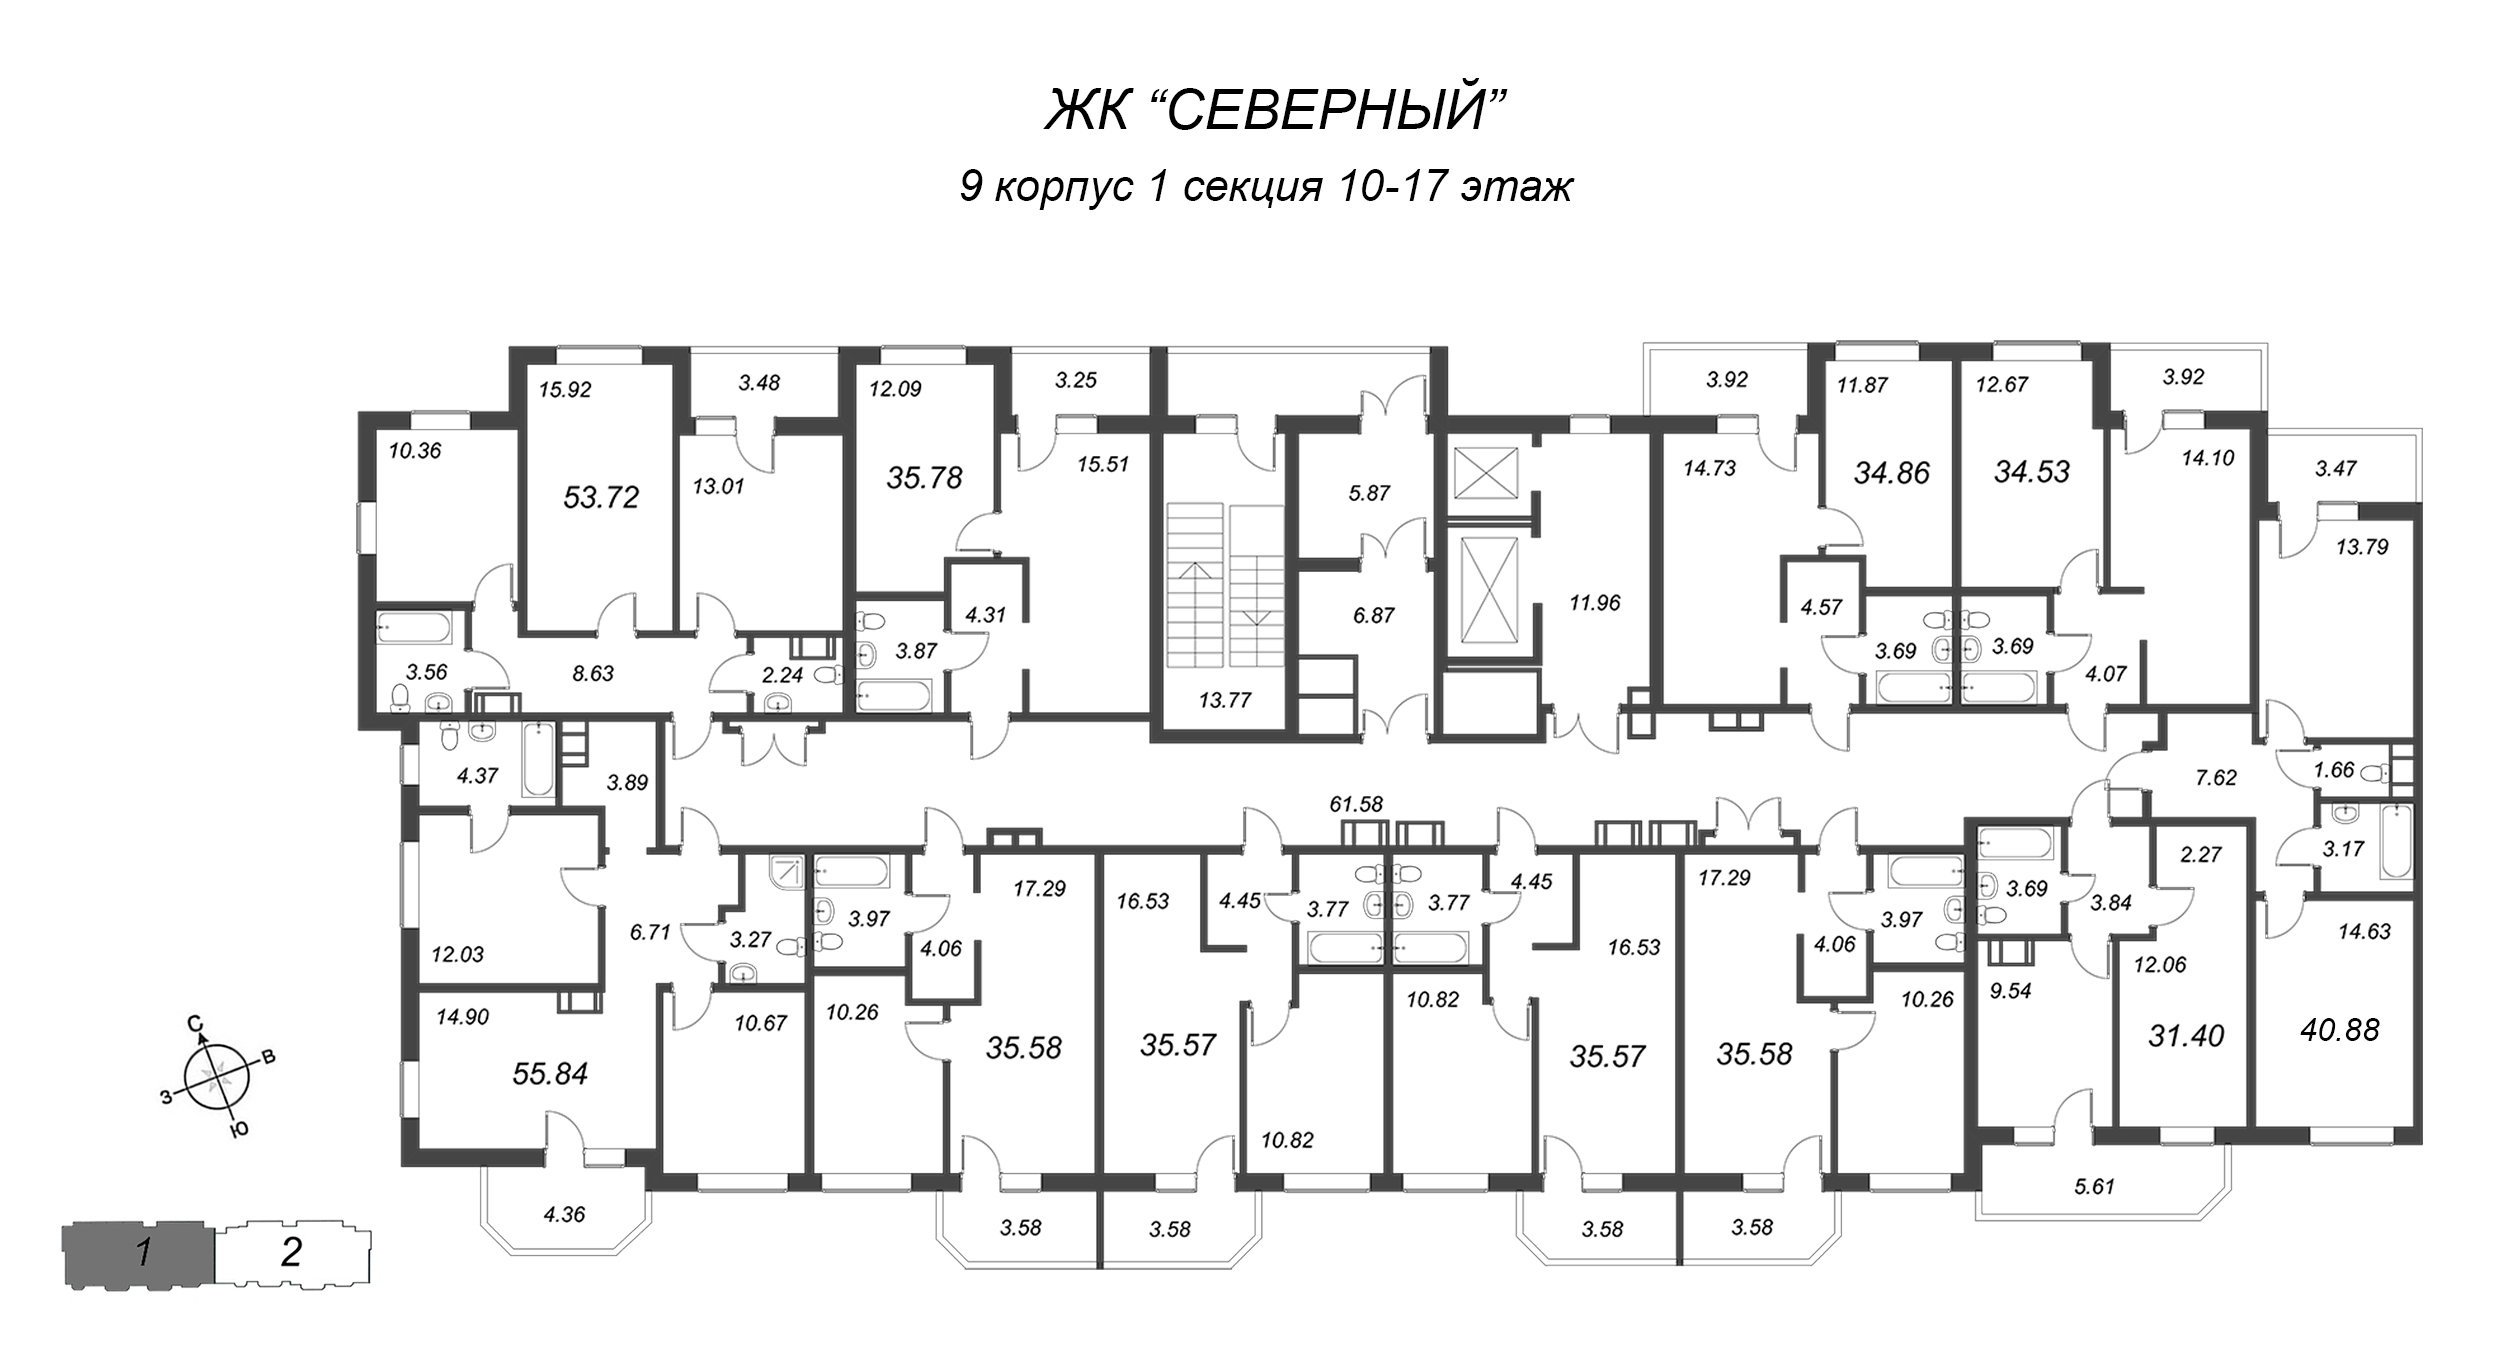 3-комнатная (Евро) квартира, 55.84 м² - планировка этажа